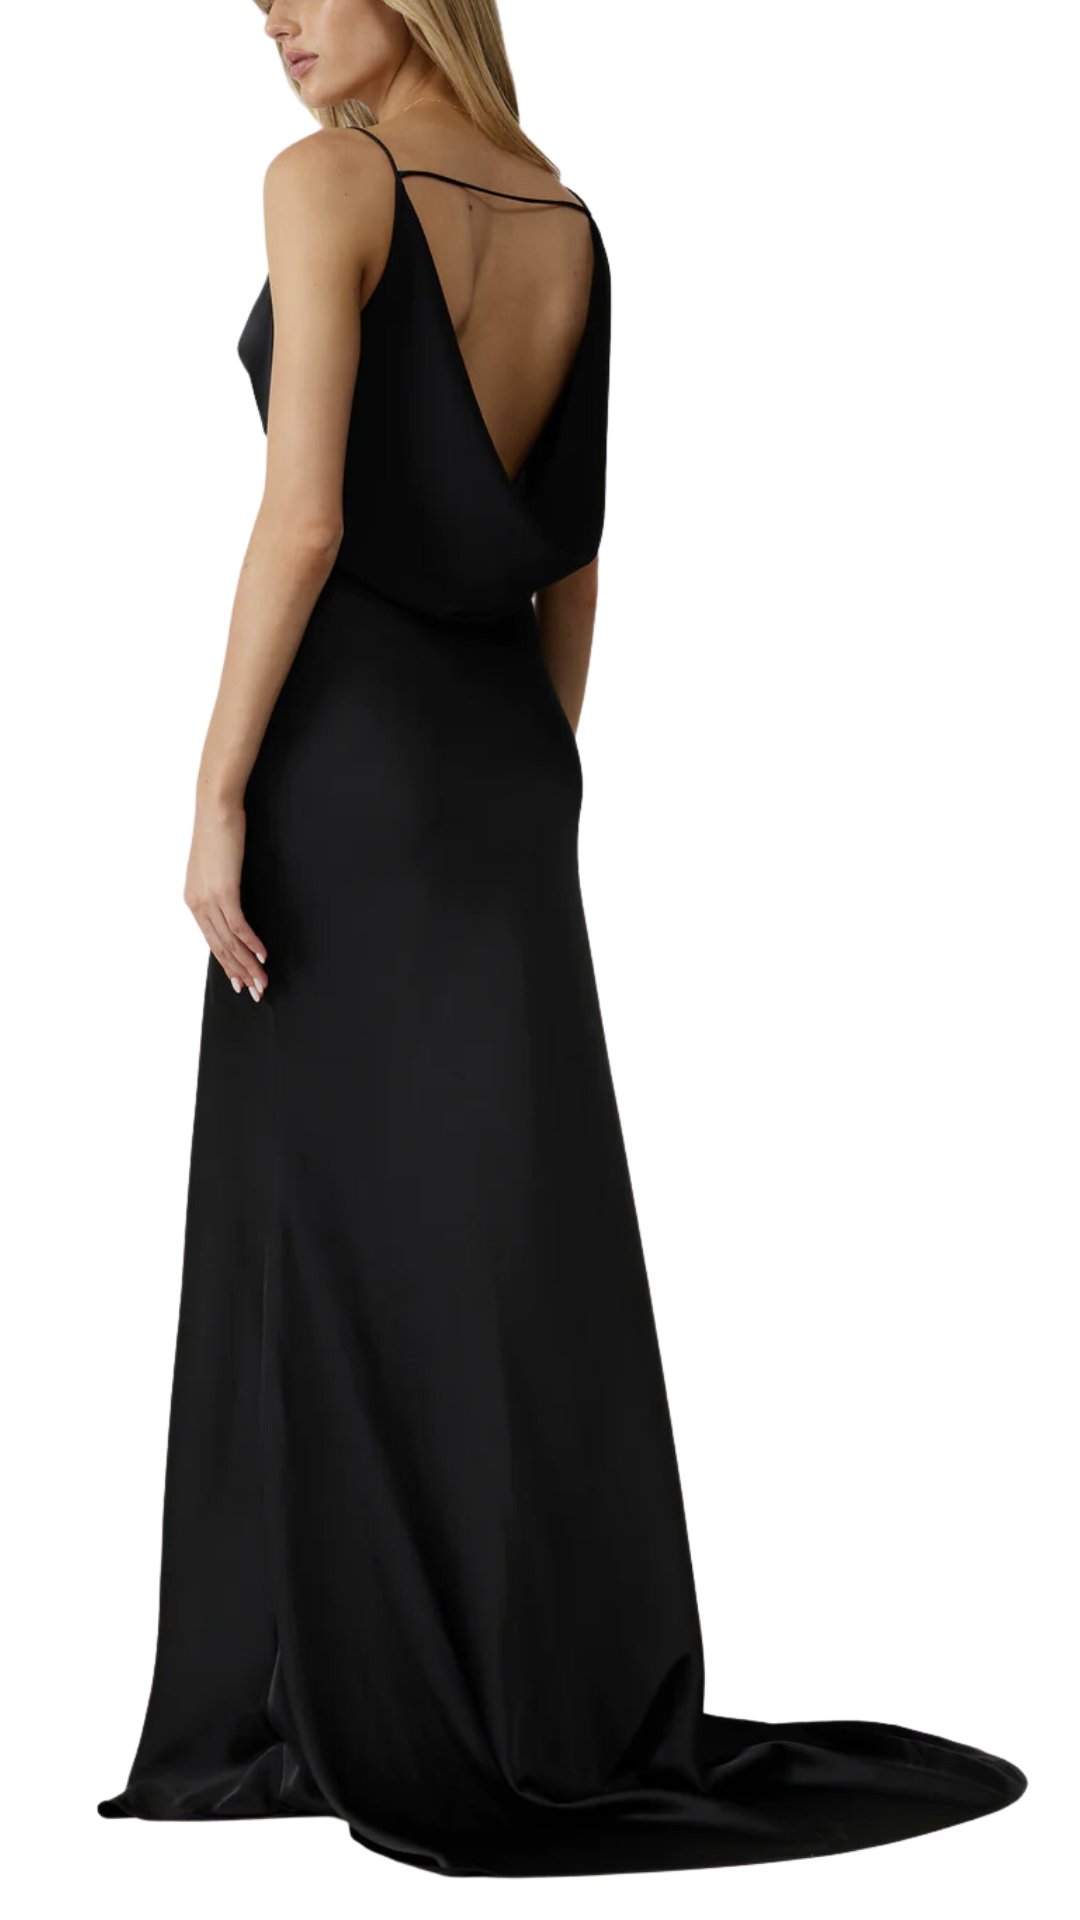 Lexi Aden Cowl Dress in Black